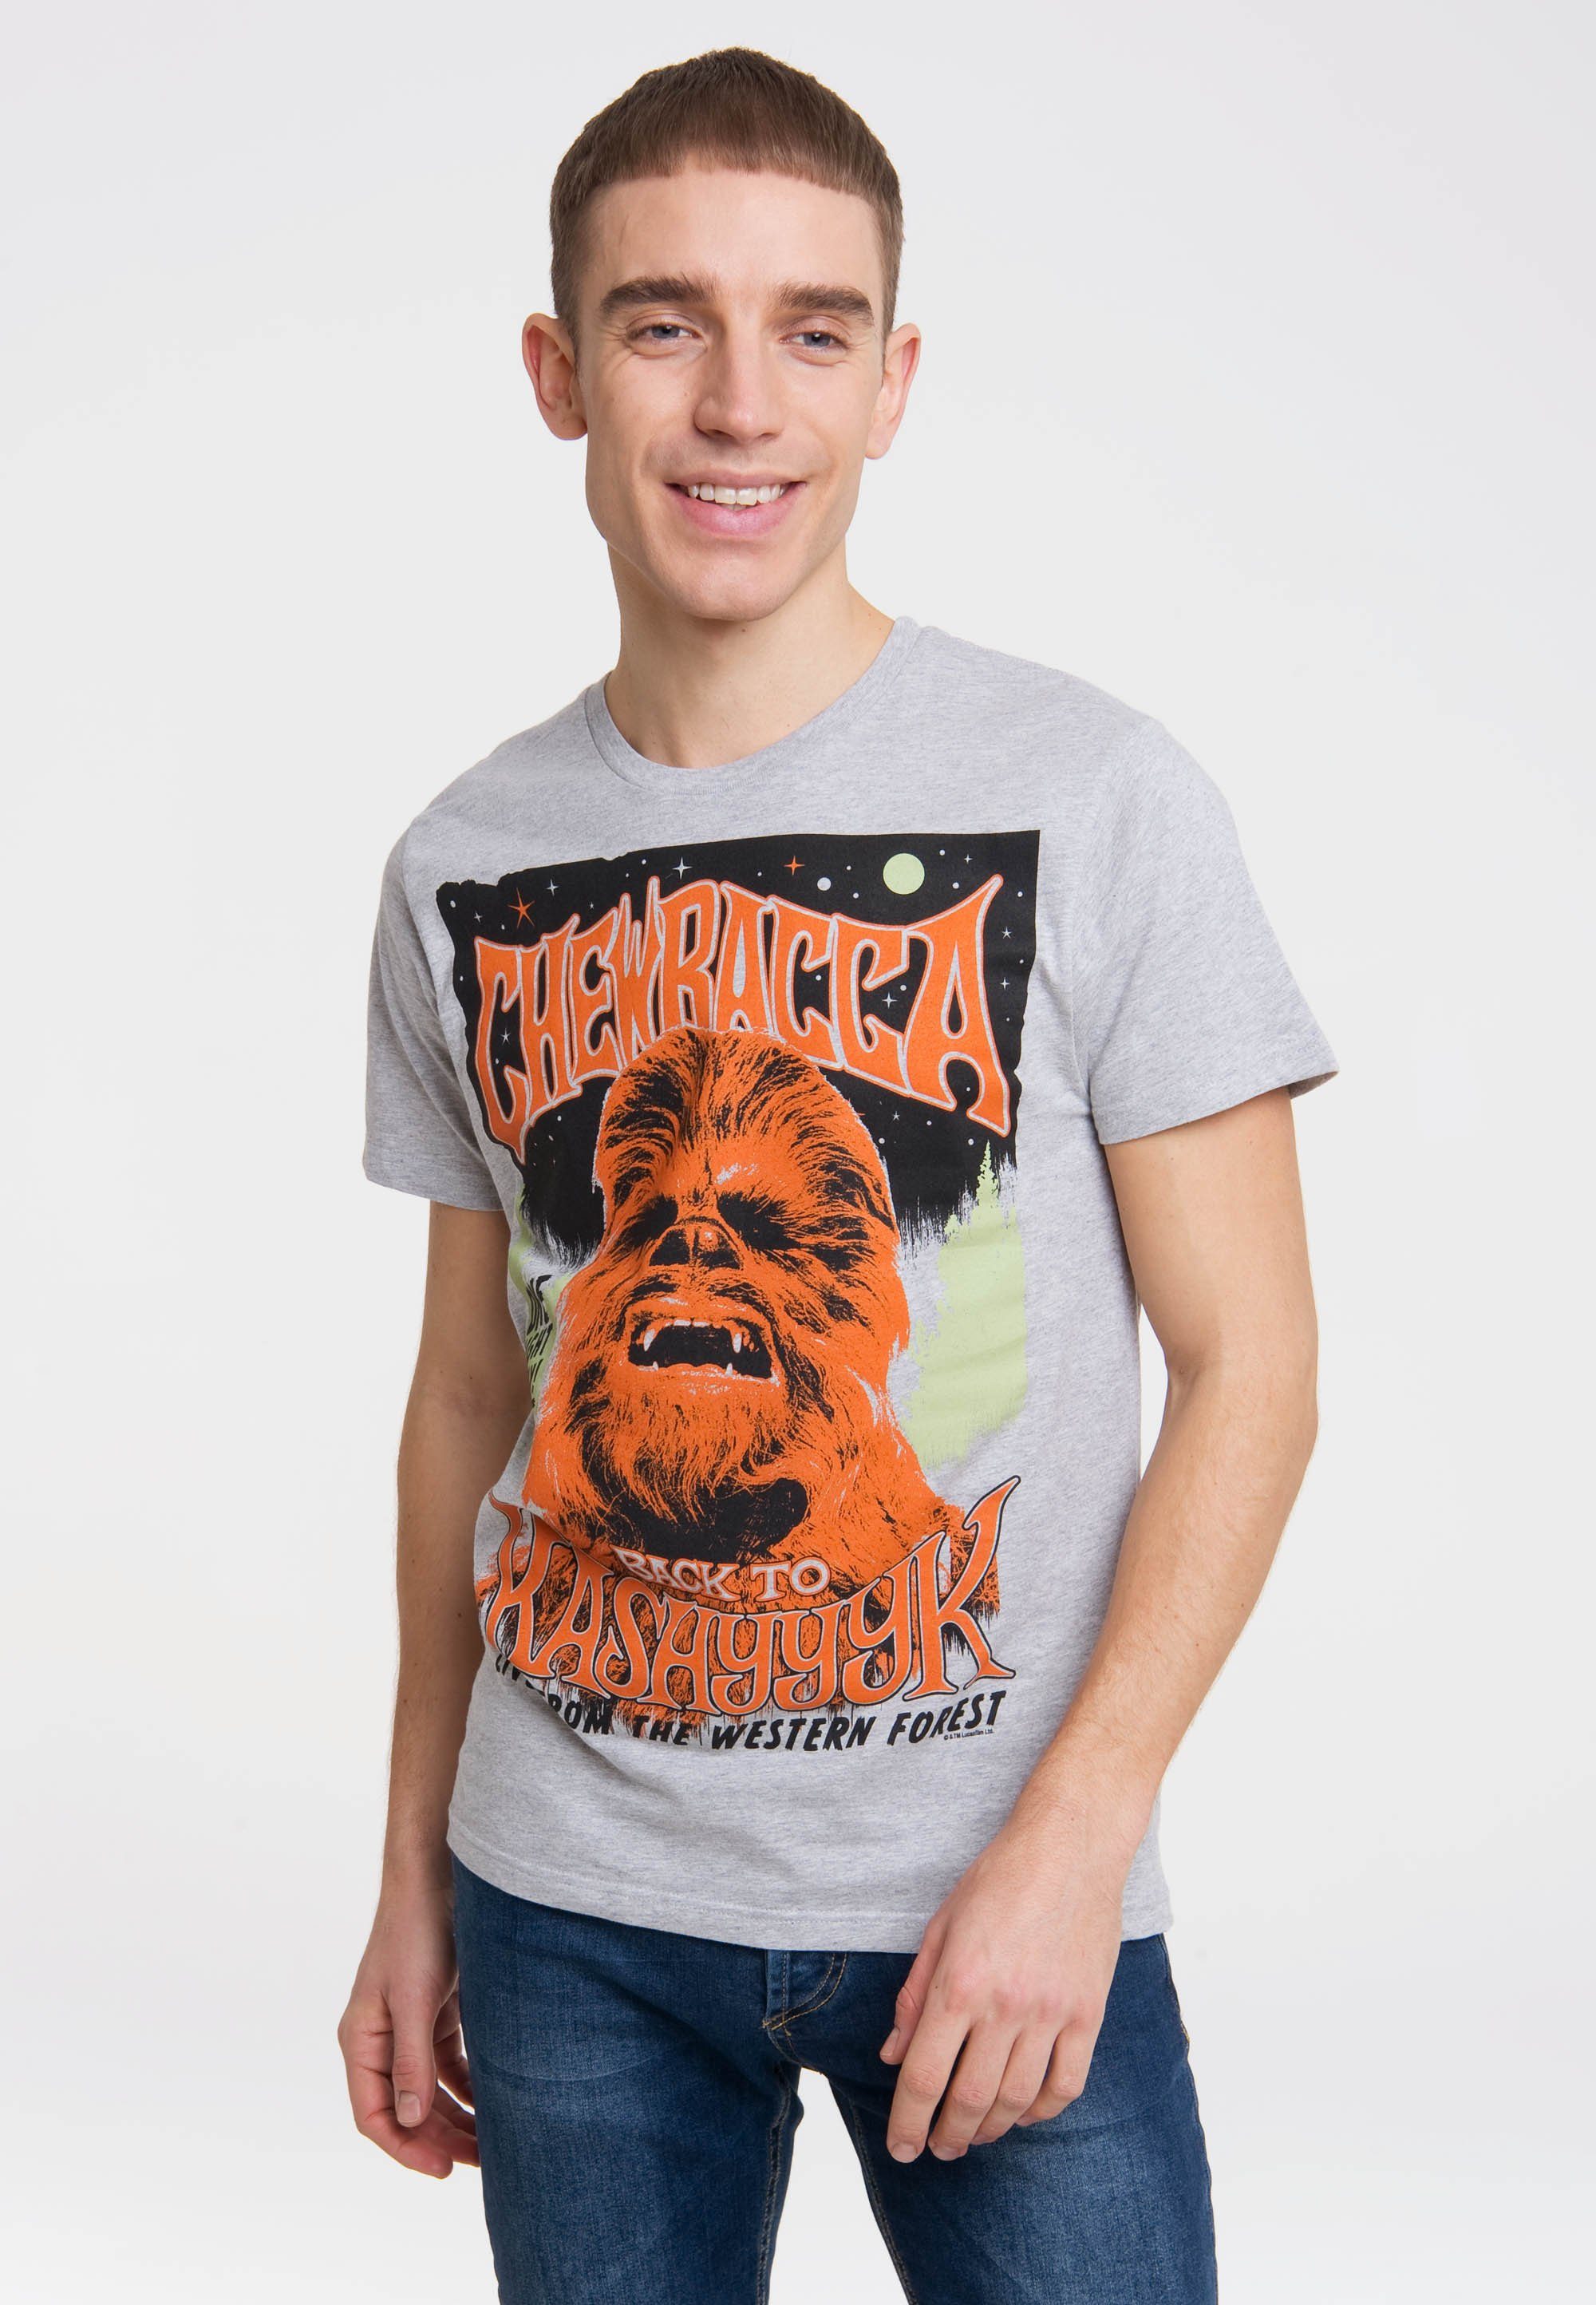 LOGOSHIRT T-Shirt Star Wars - Chewbacca - Back To Kashyyyk mit Chewbacca -Frontdruck | T-Shirts